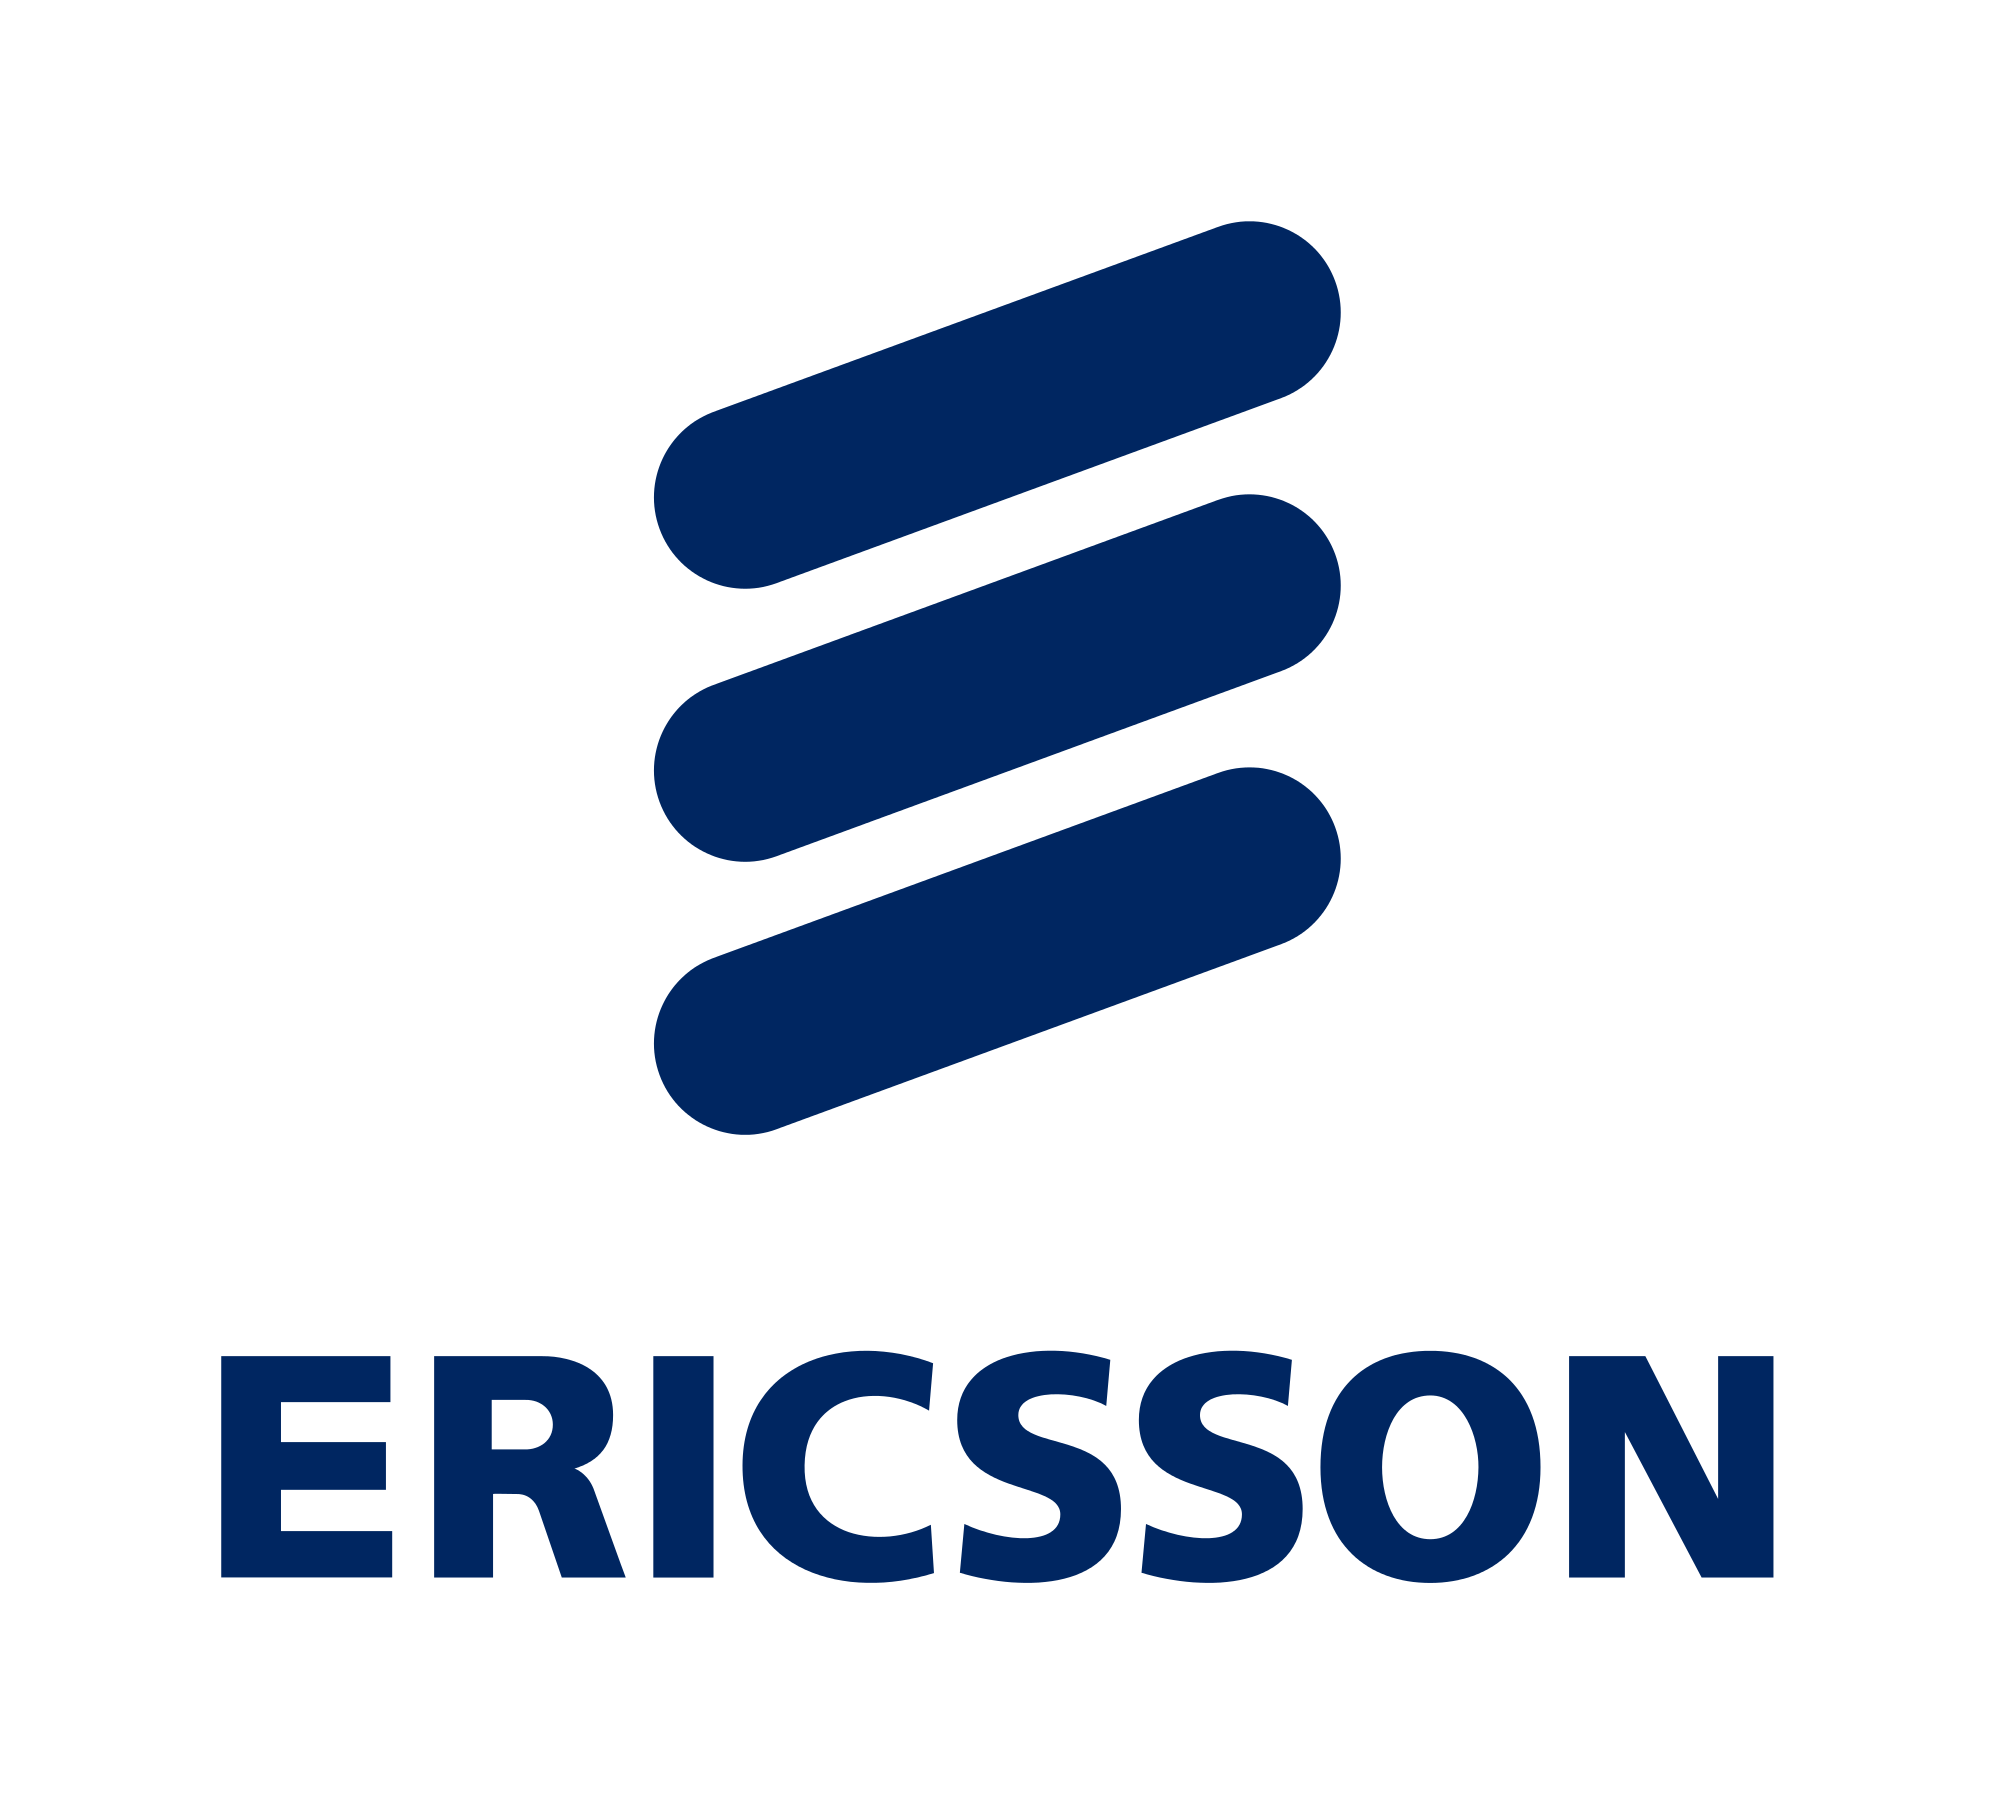 Leading Telecommunications Company Logo - Ericsson is a world-leading provider of telecommunications equipment ...